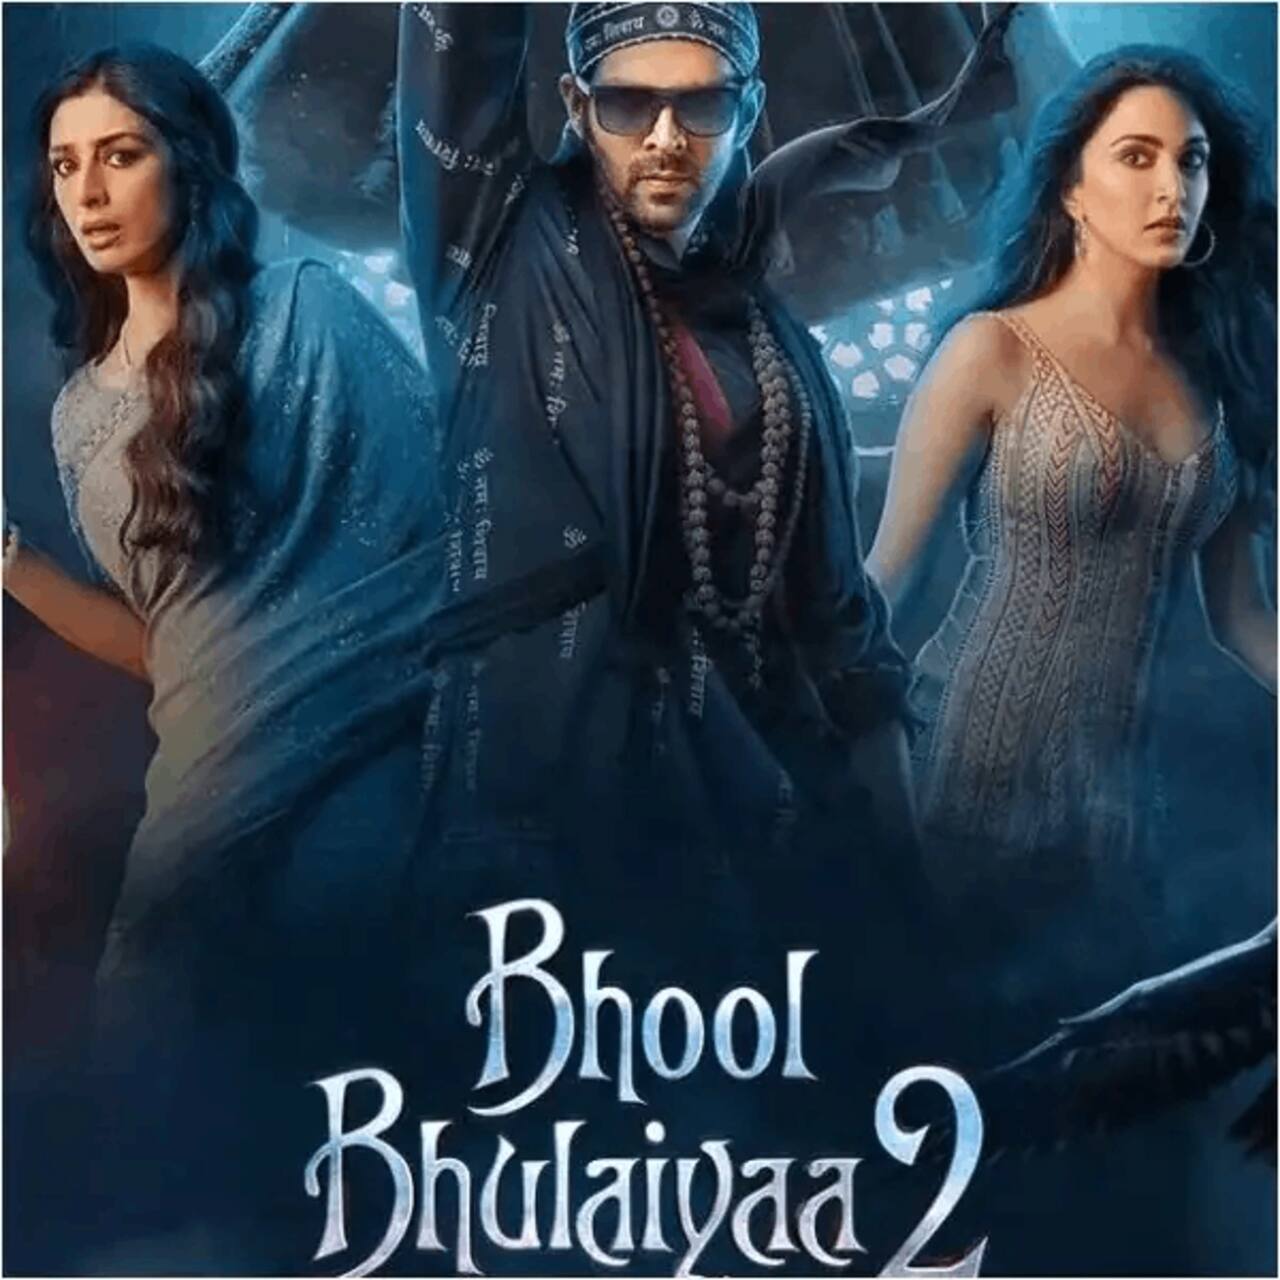 Bhool Bhulaiyaa 2 turns blockbuster hit